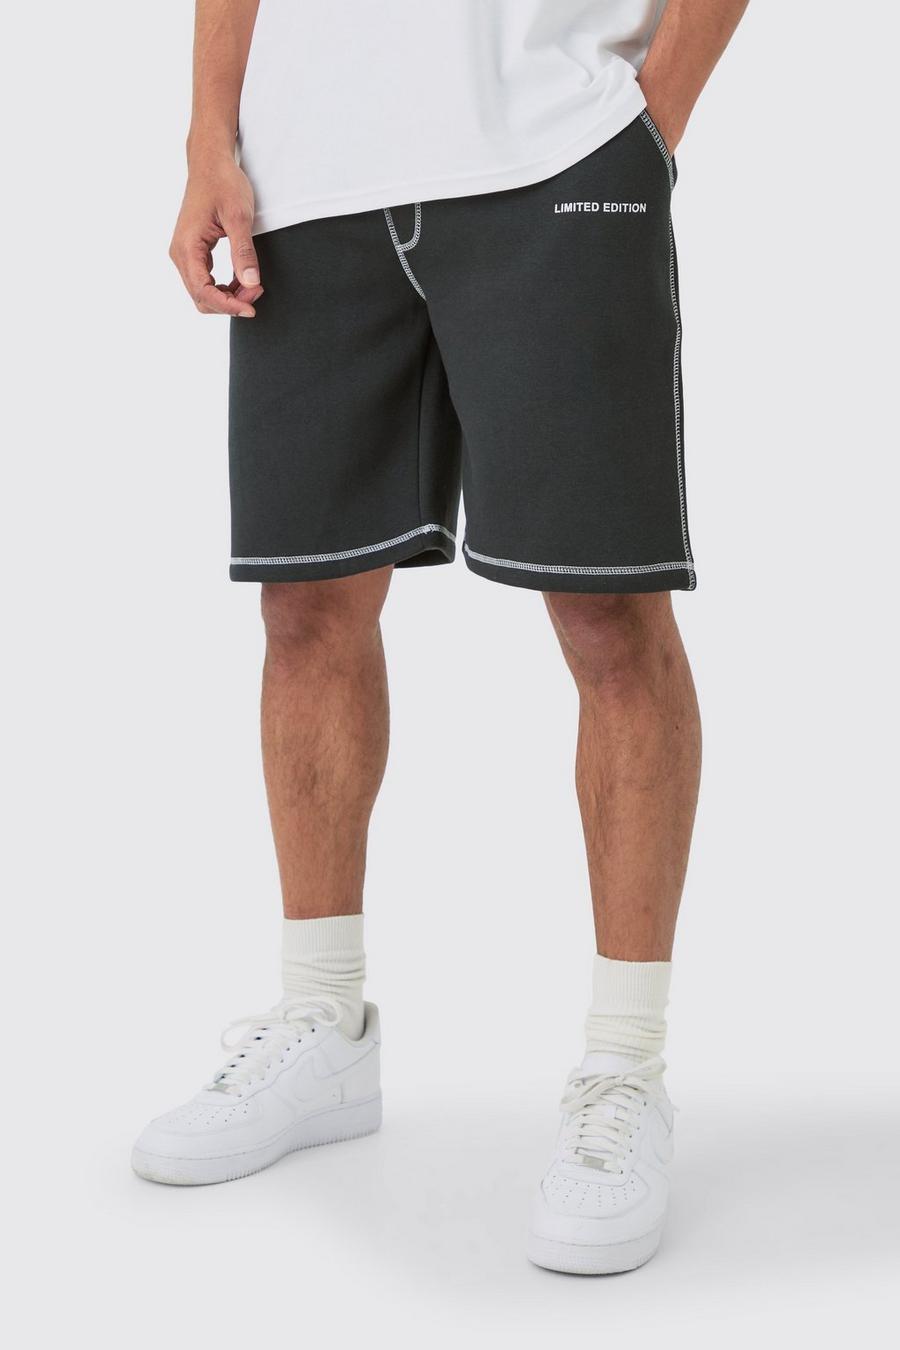 Lockere Limited Edition Shorts mit Kontrast-Naht, Black image number 1